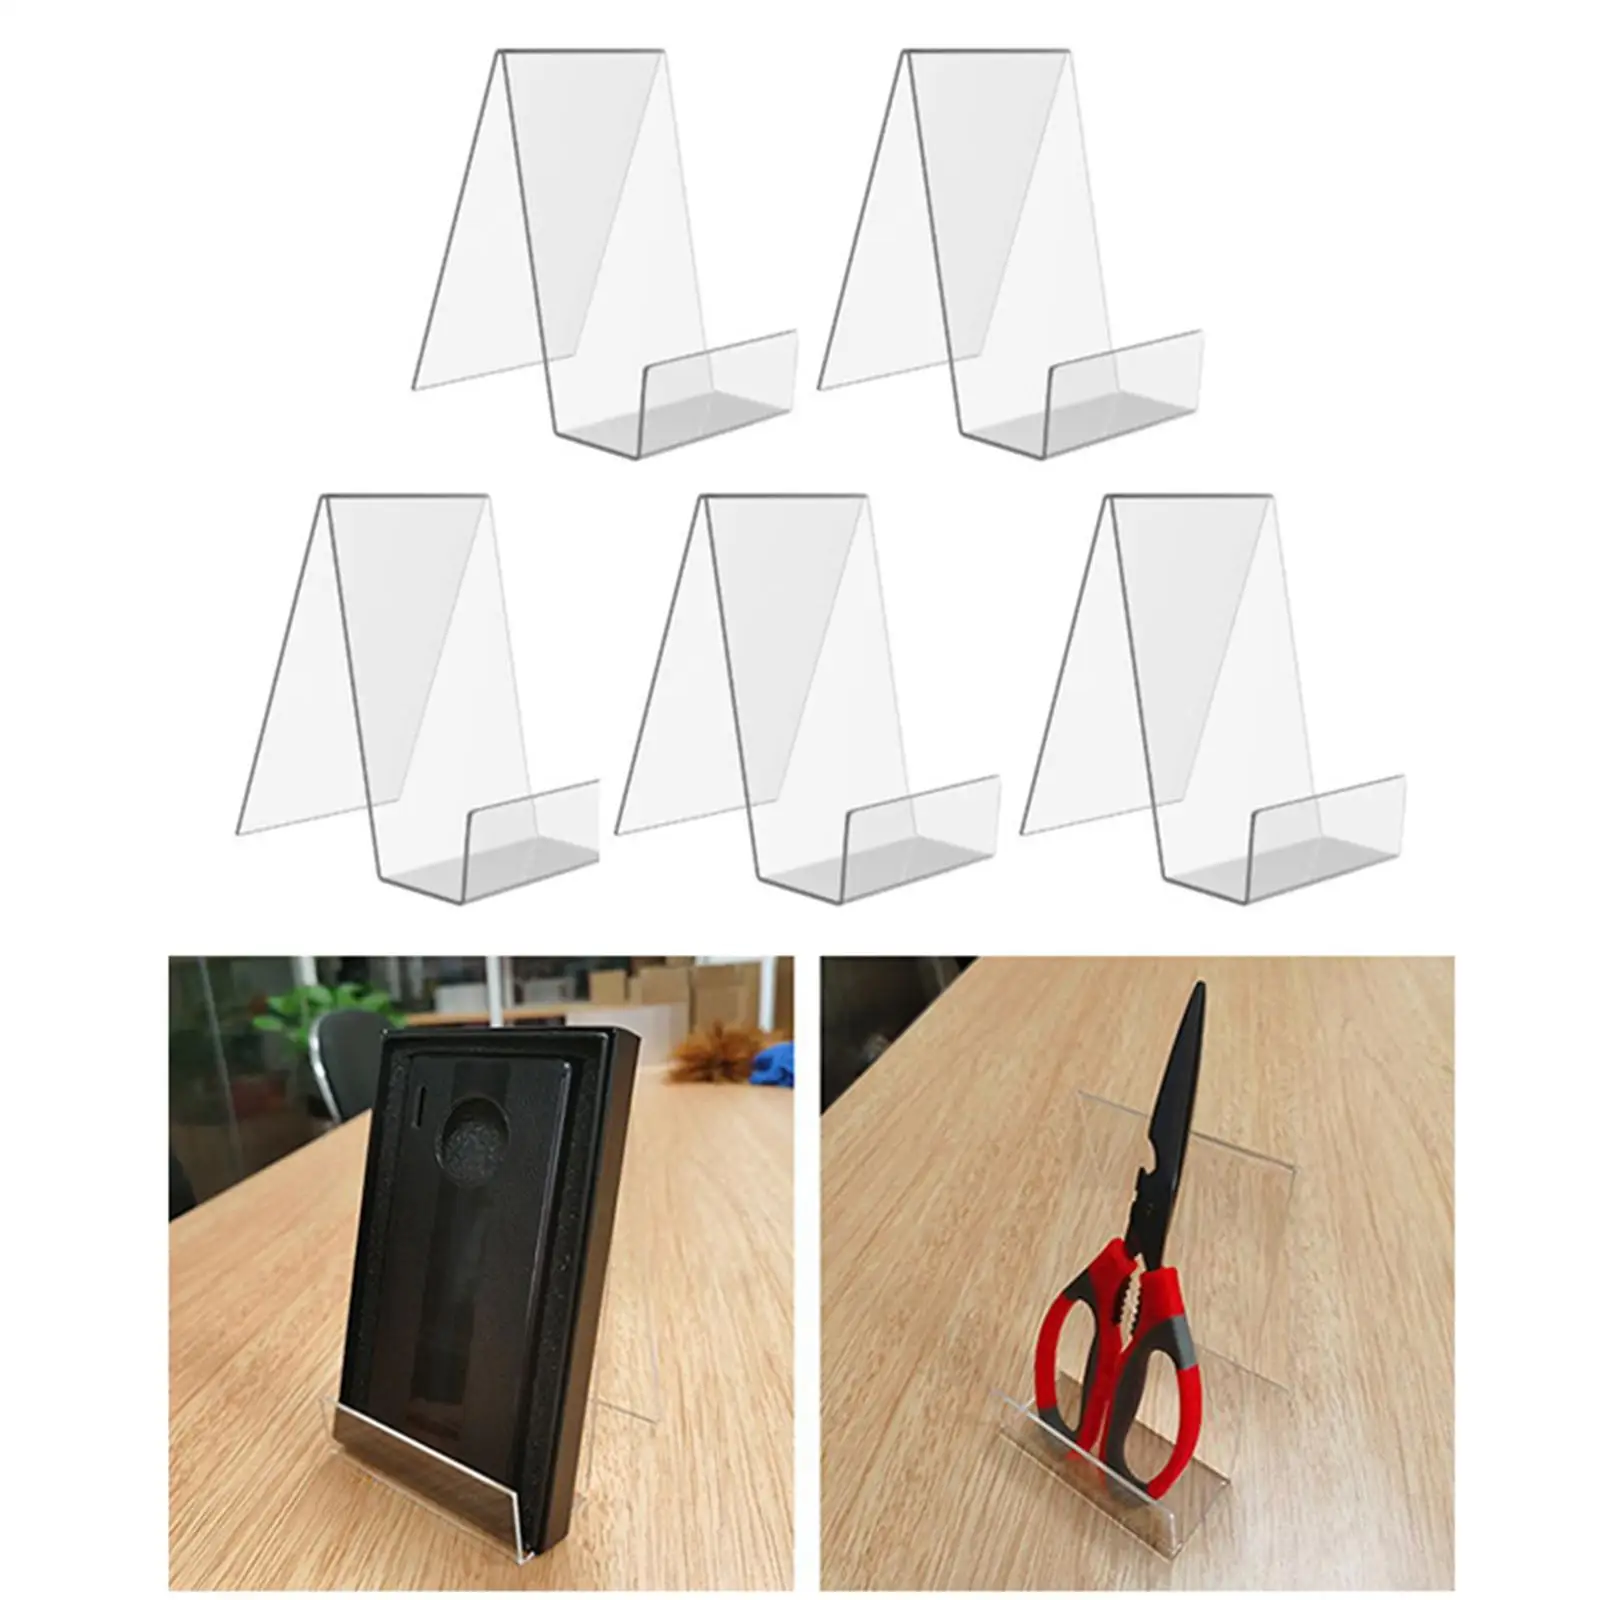 5Pcs  Acrylic Display Easel Literature Holder Shelf Book Plate Stand Desktop Magazine Shelves for , Home Office